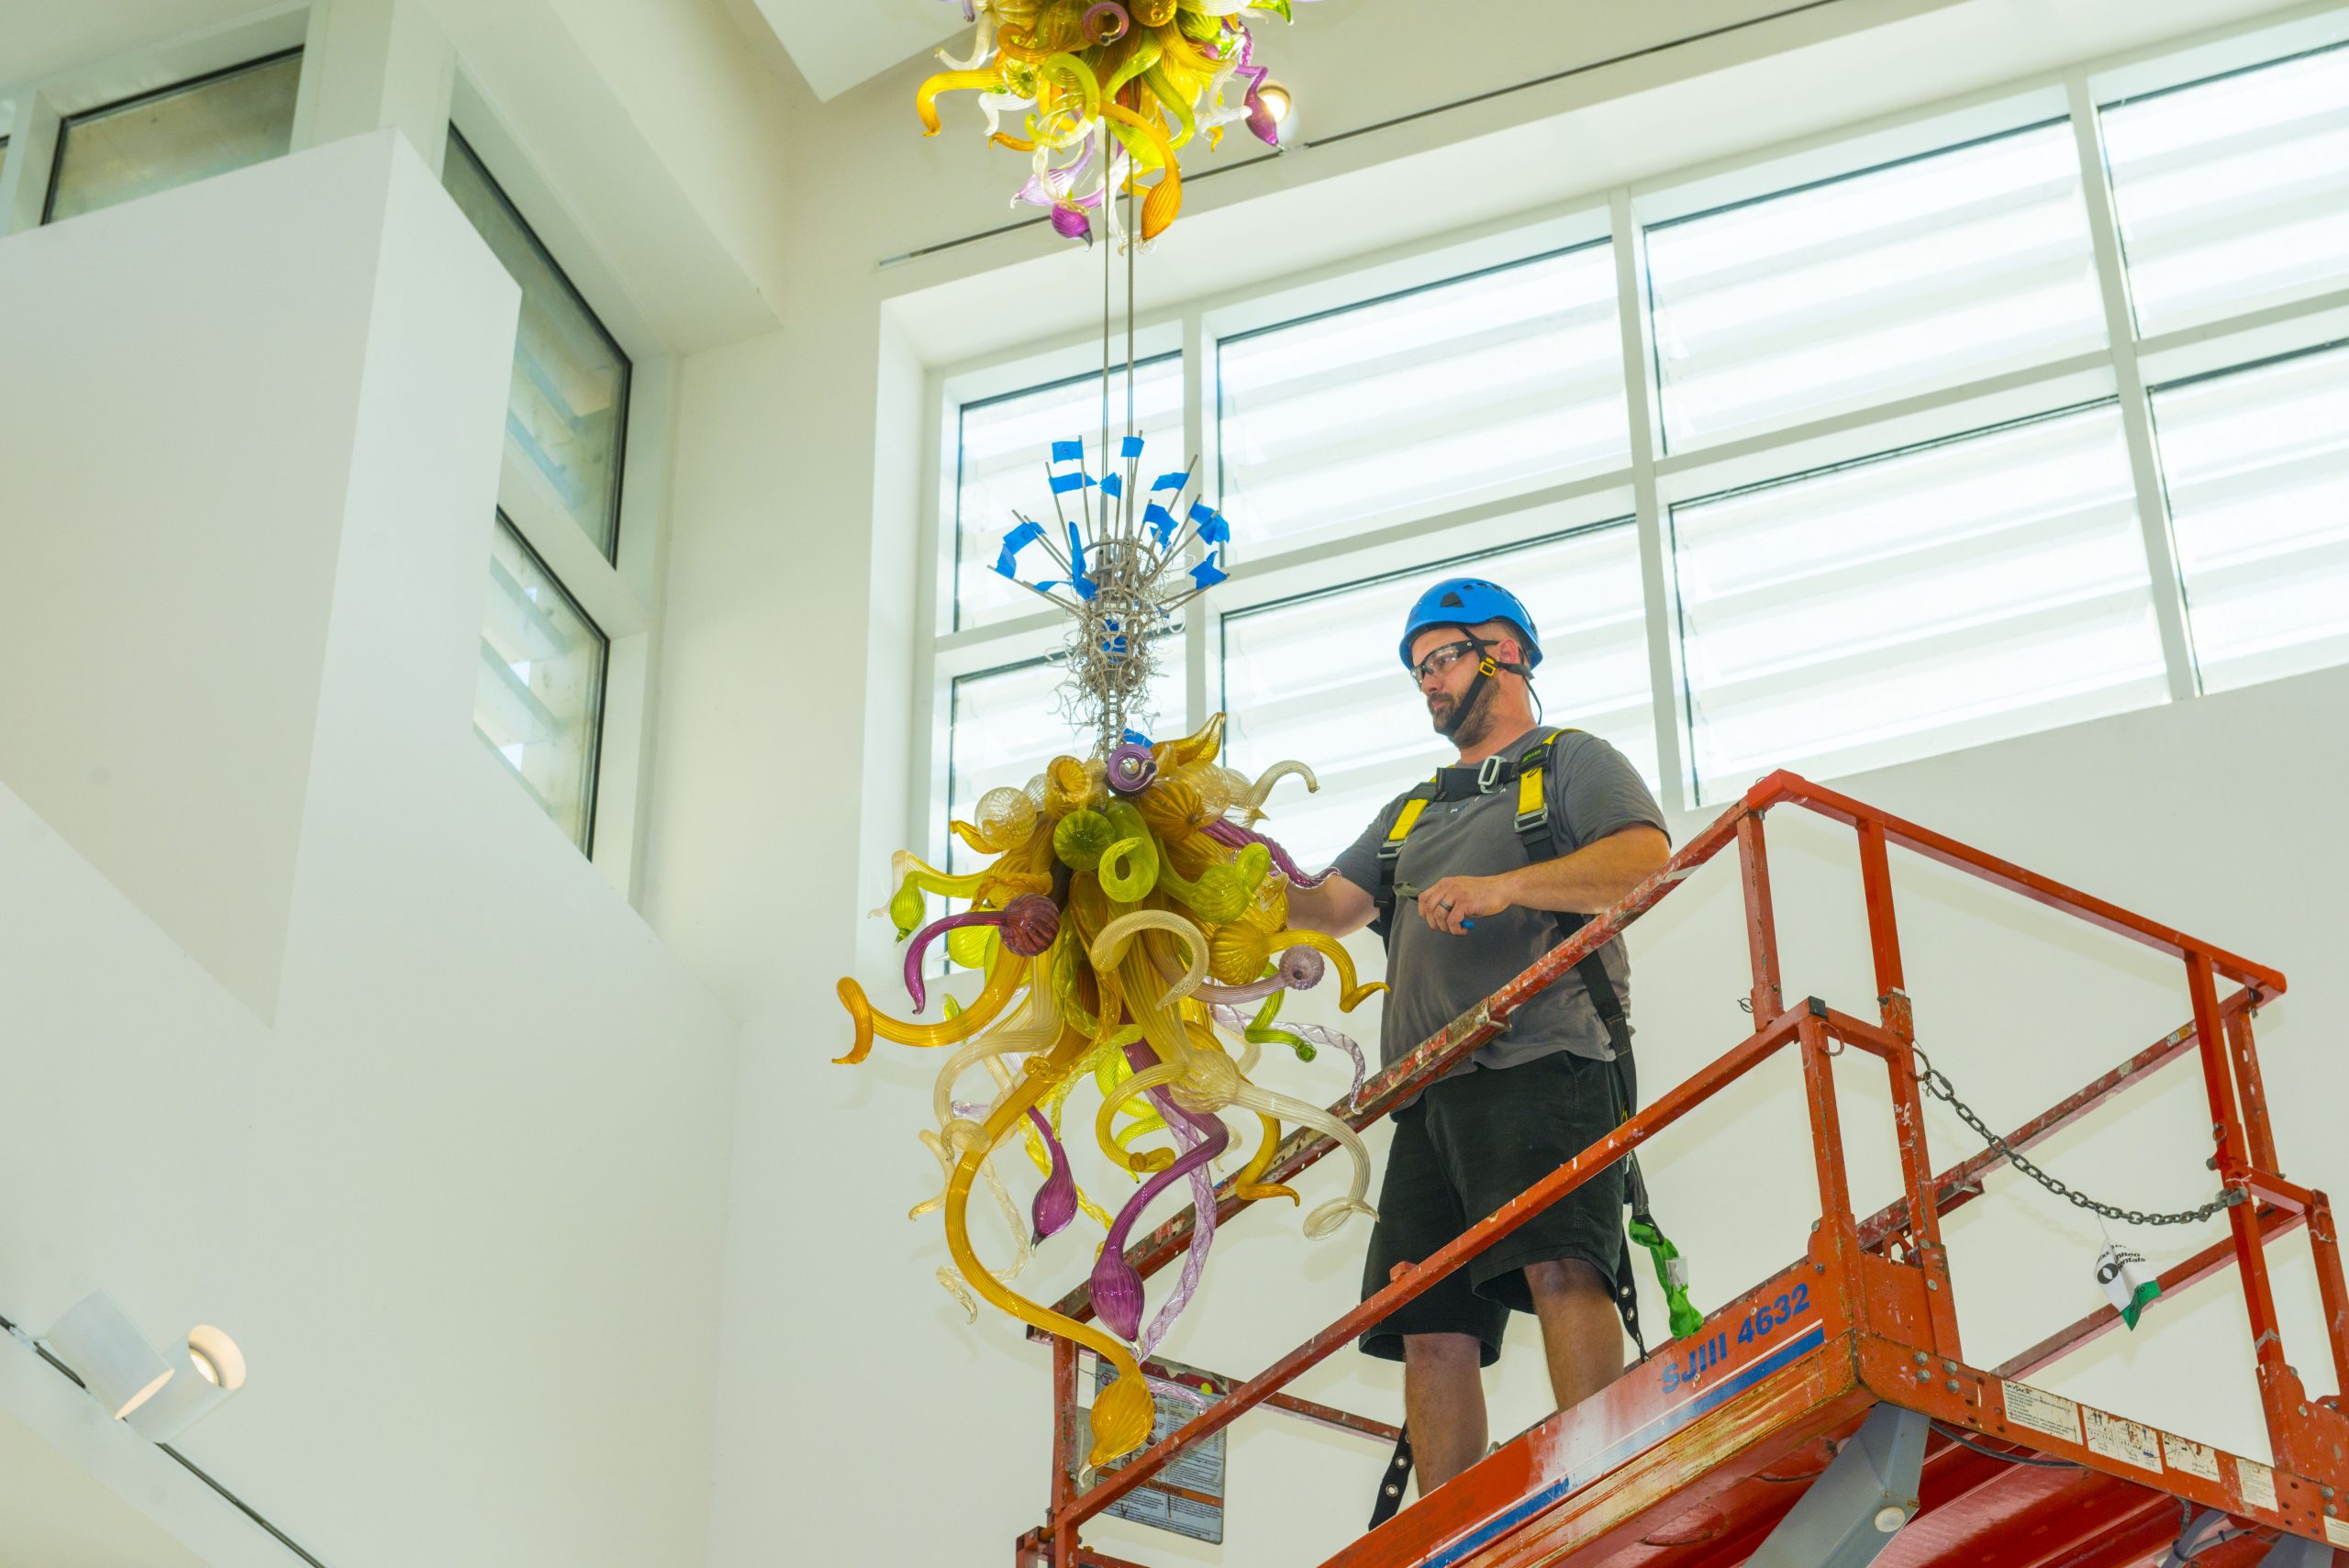 A man in safety gear standing on a lift assembles an intricate glass sculpture.